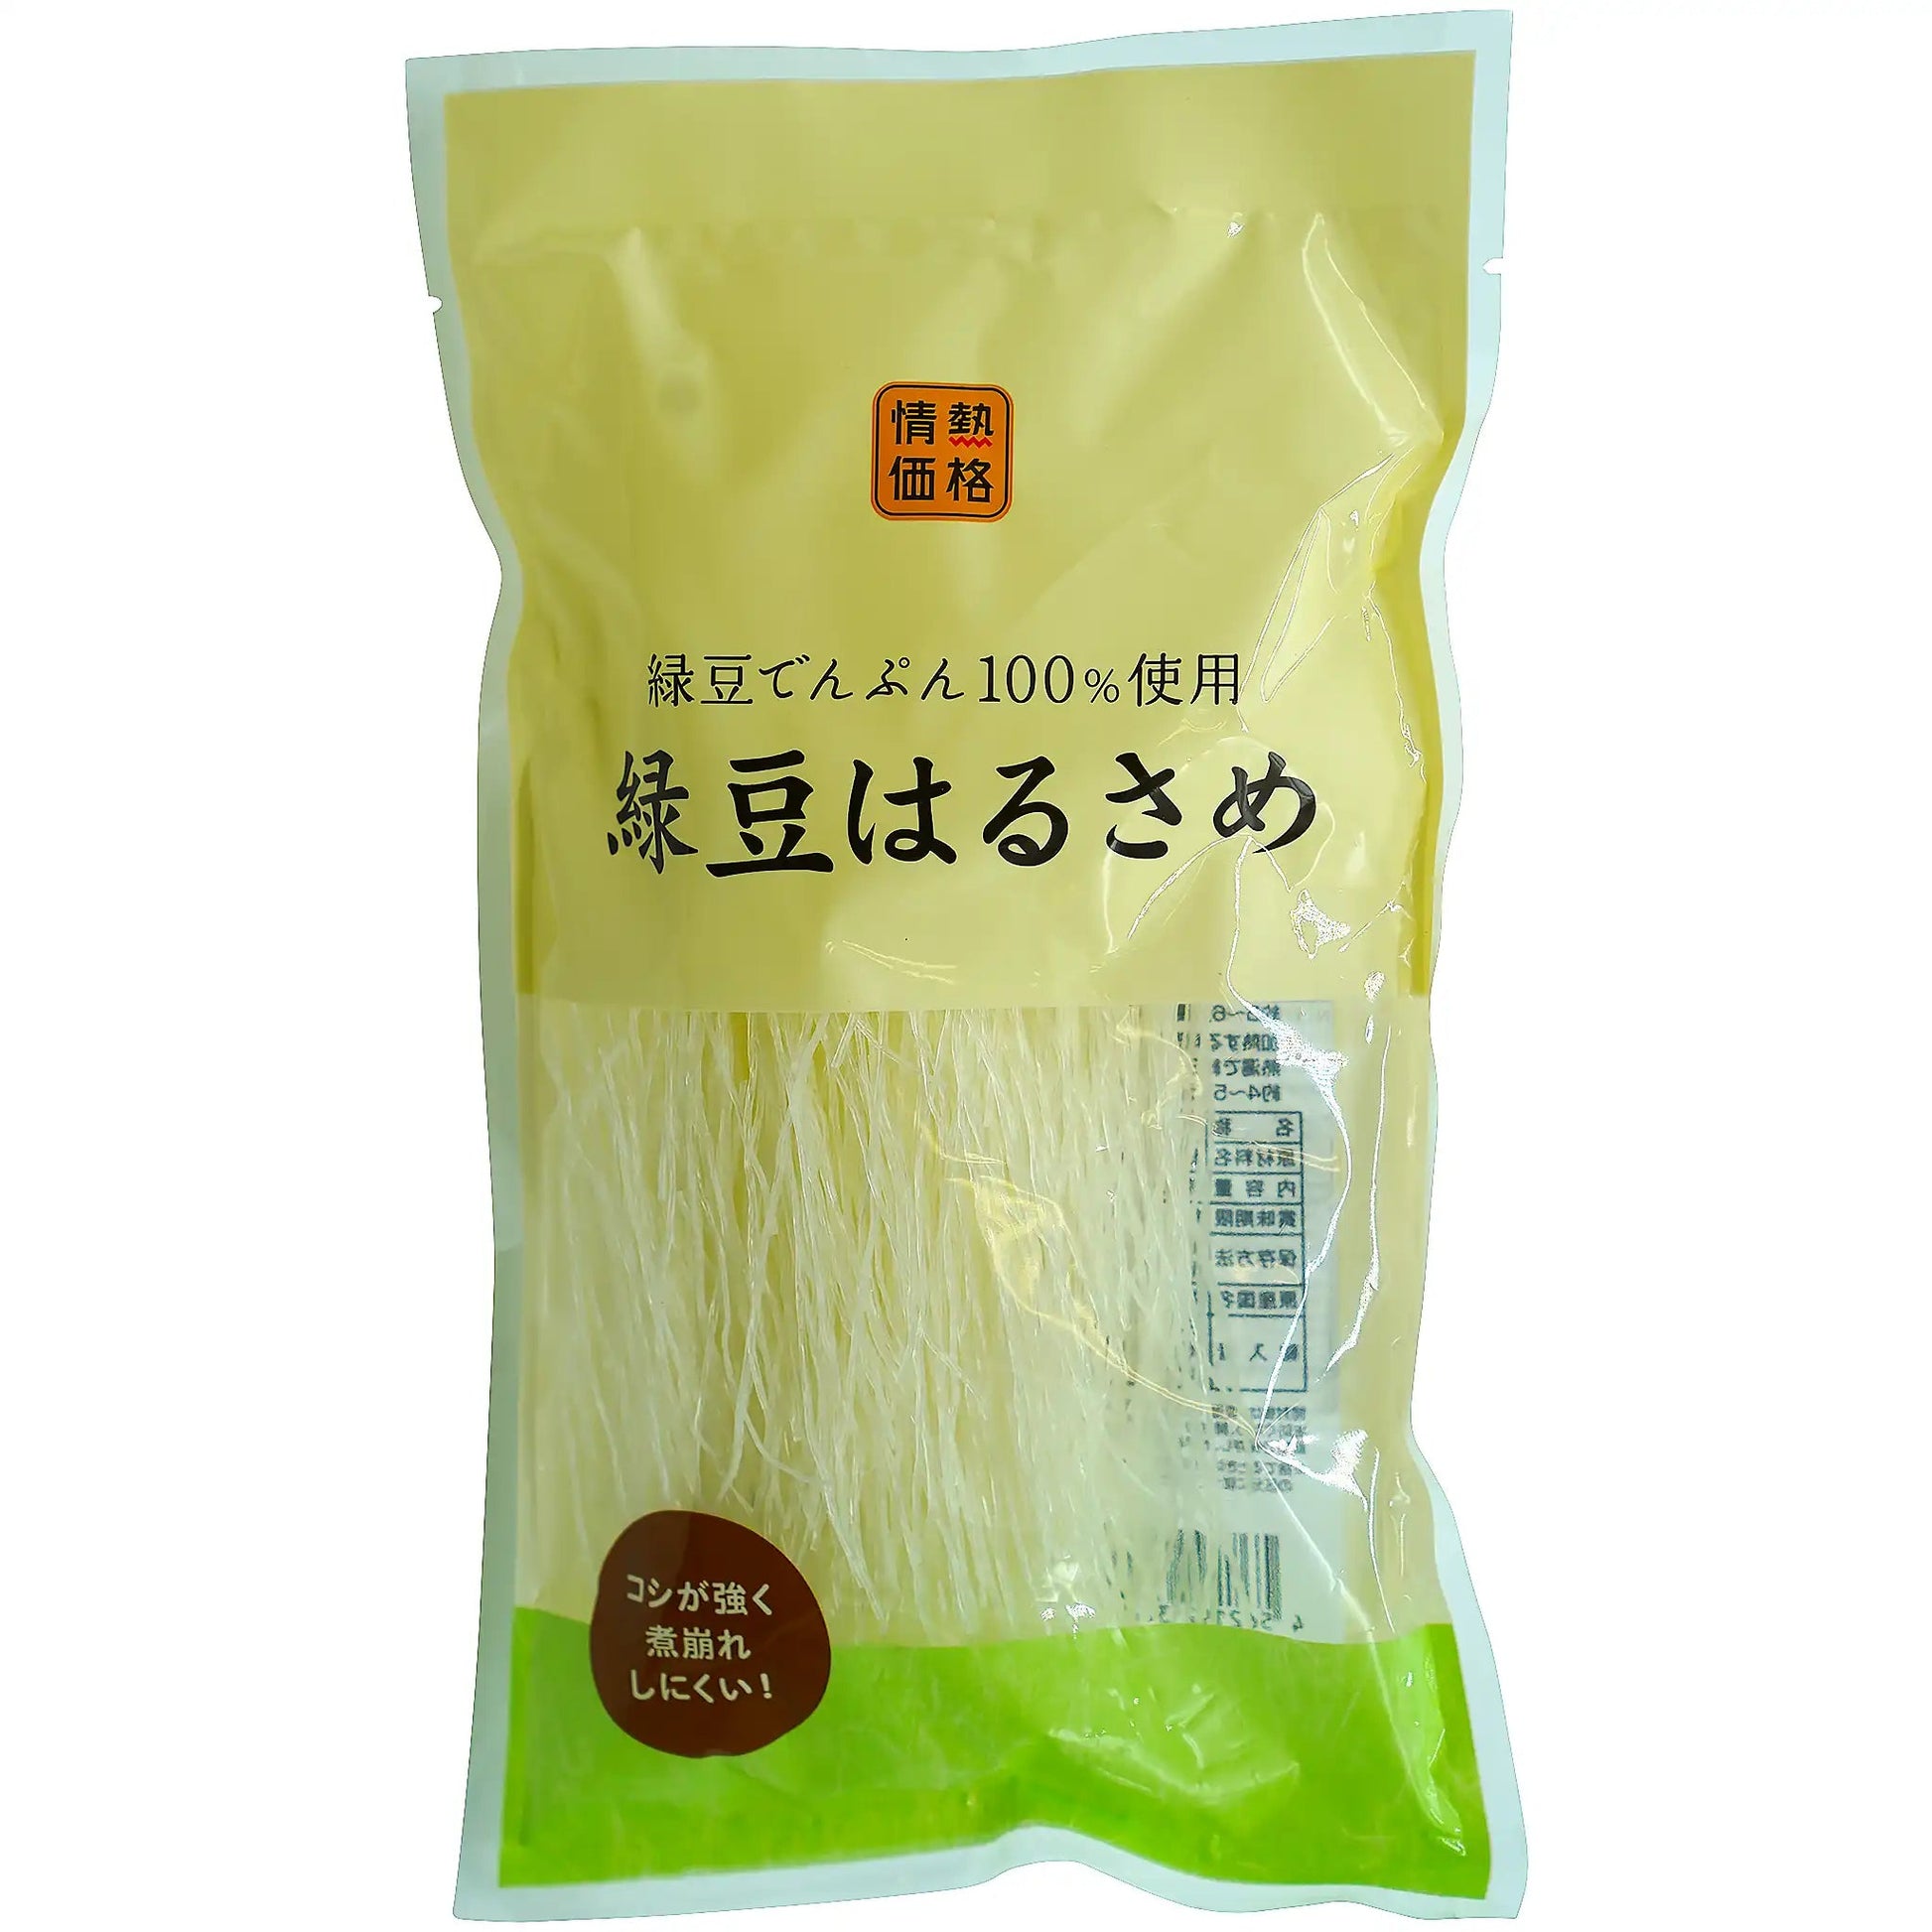 Jonetz Virmicelli Noodles 3.38 oz - Tokyo Central - Dried Noodles - Jonetz -